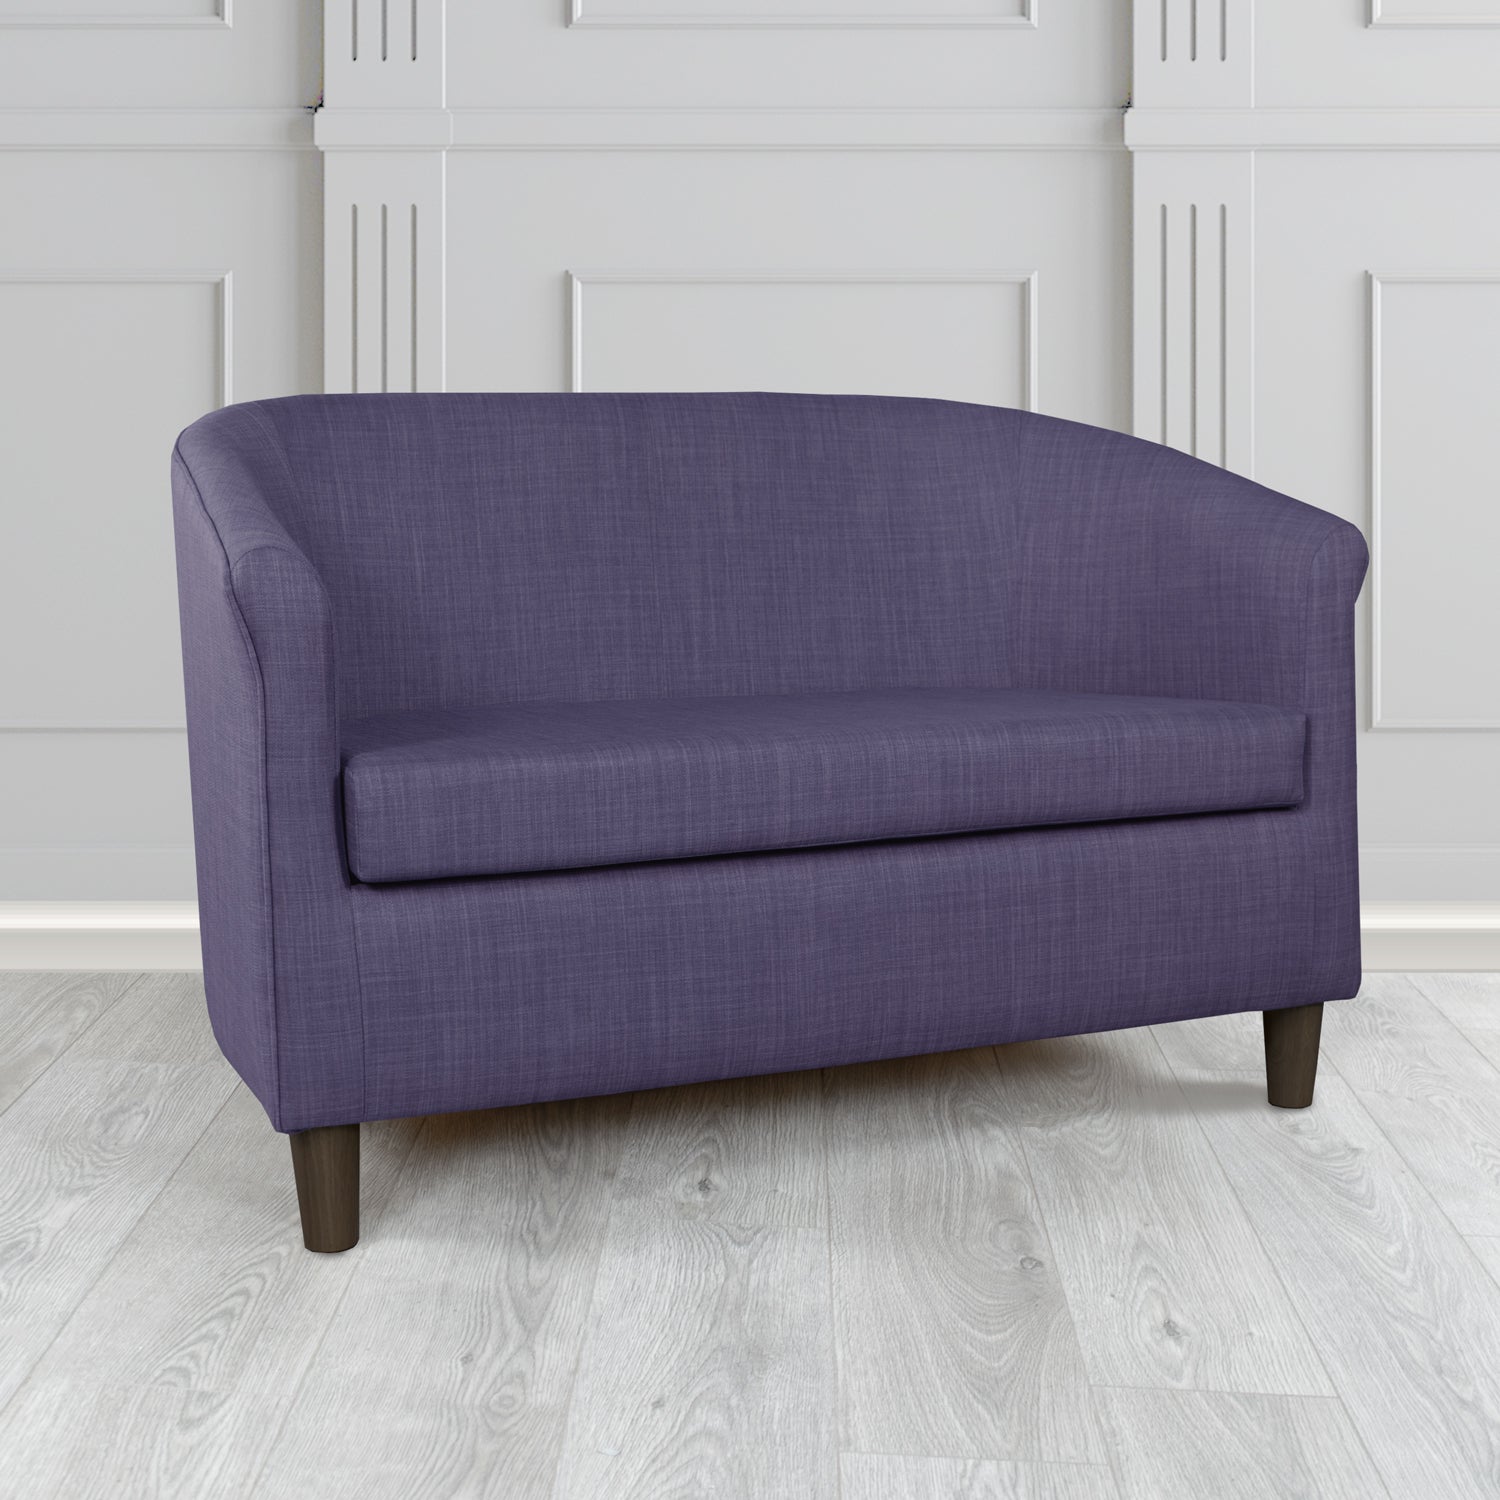 Tuscany Charles Purple Plain Linen Fabric 2 Seater Tub Sofa - The Tub Chair Shop